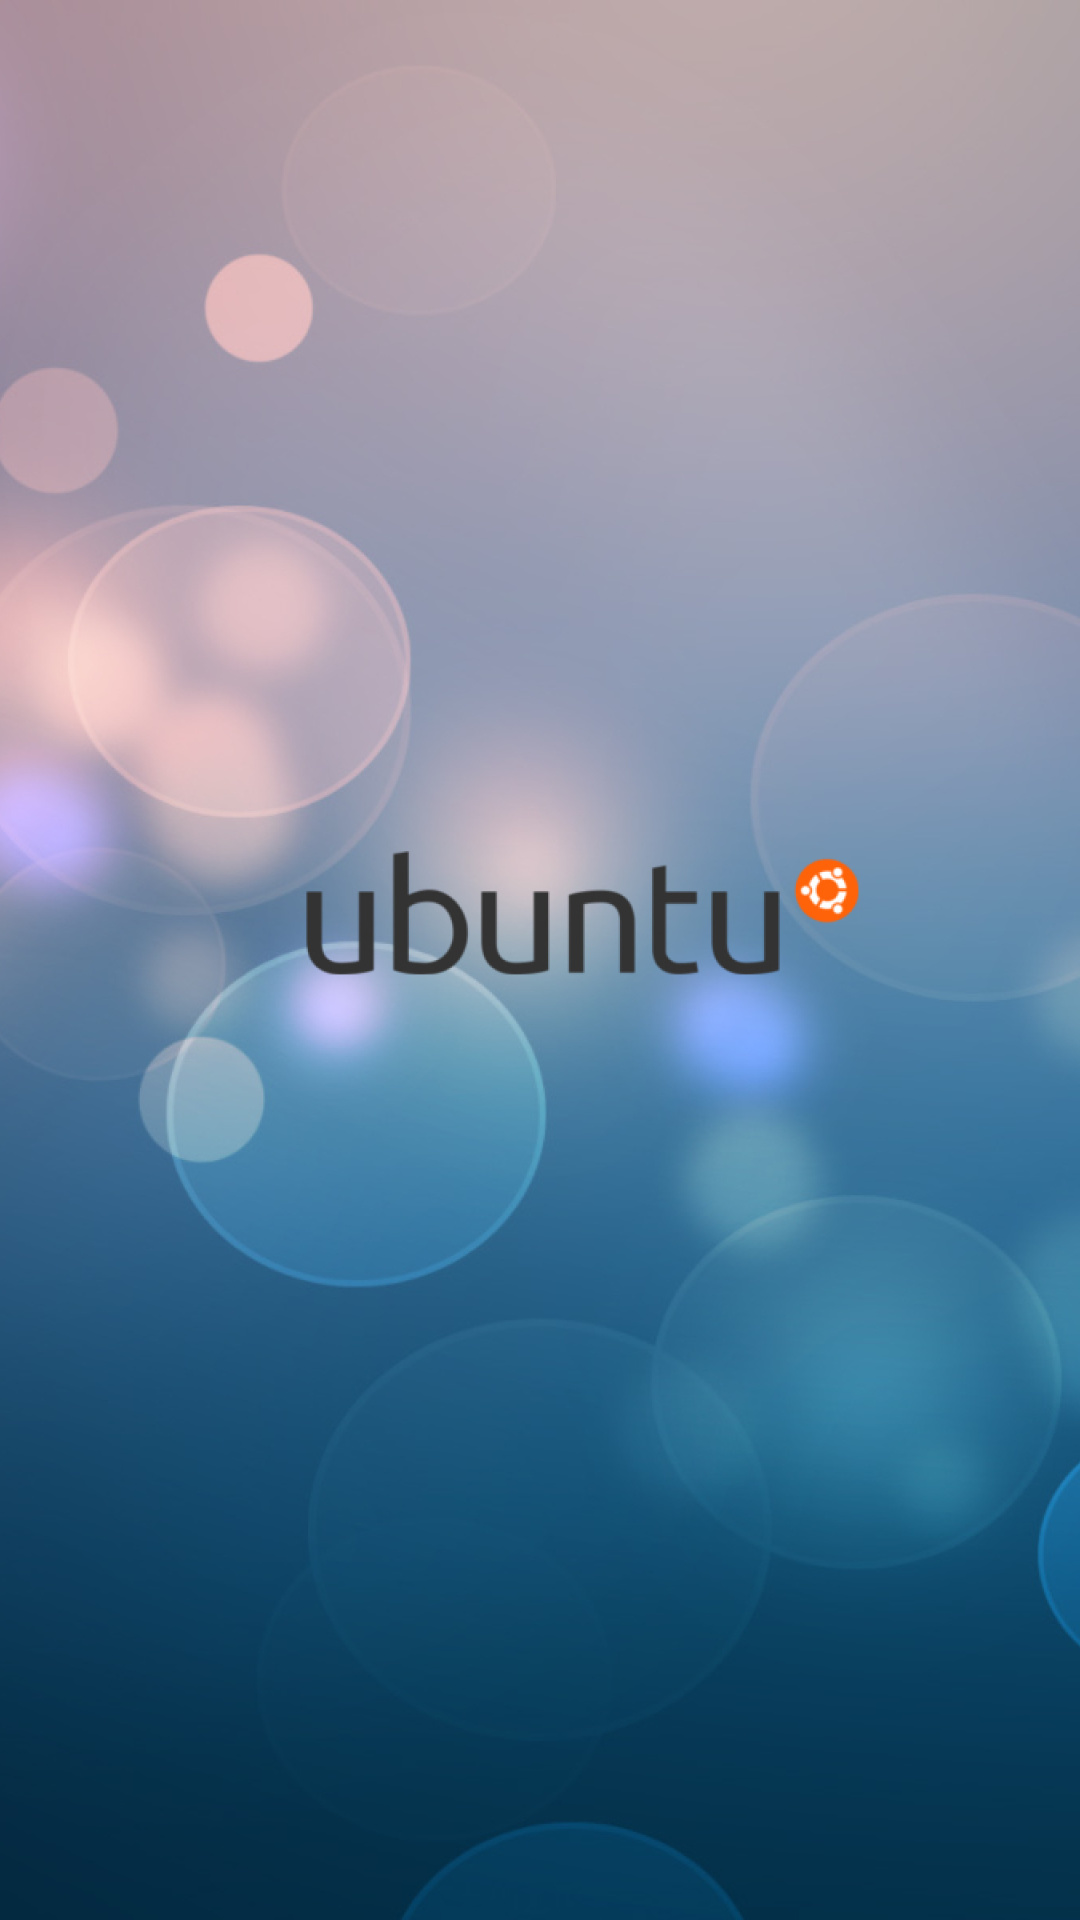 Ubuntu Linux wallpaper 1080x1920